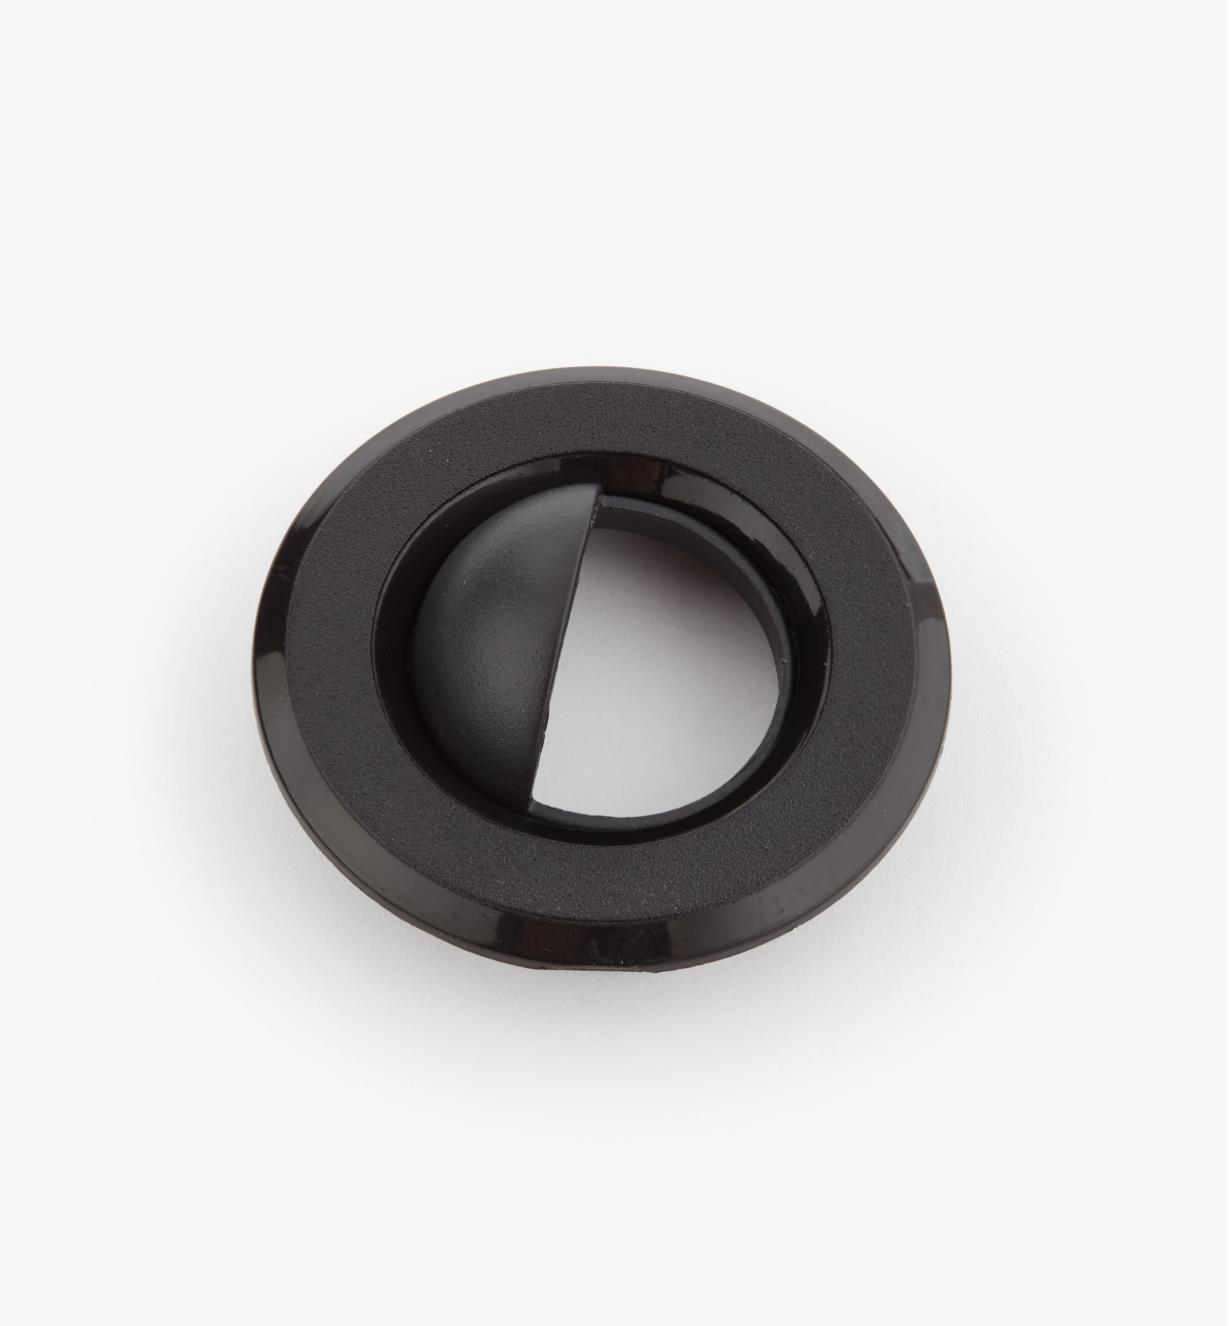 00U4356 - 1 1/2" Black Round Polycarbonate Trim Ring with Shield